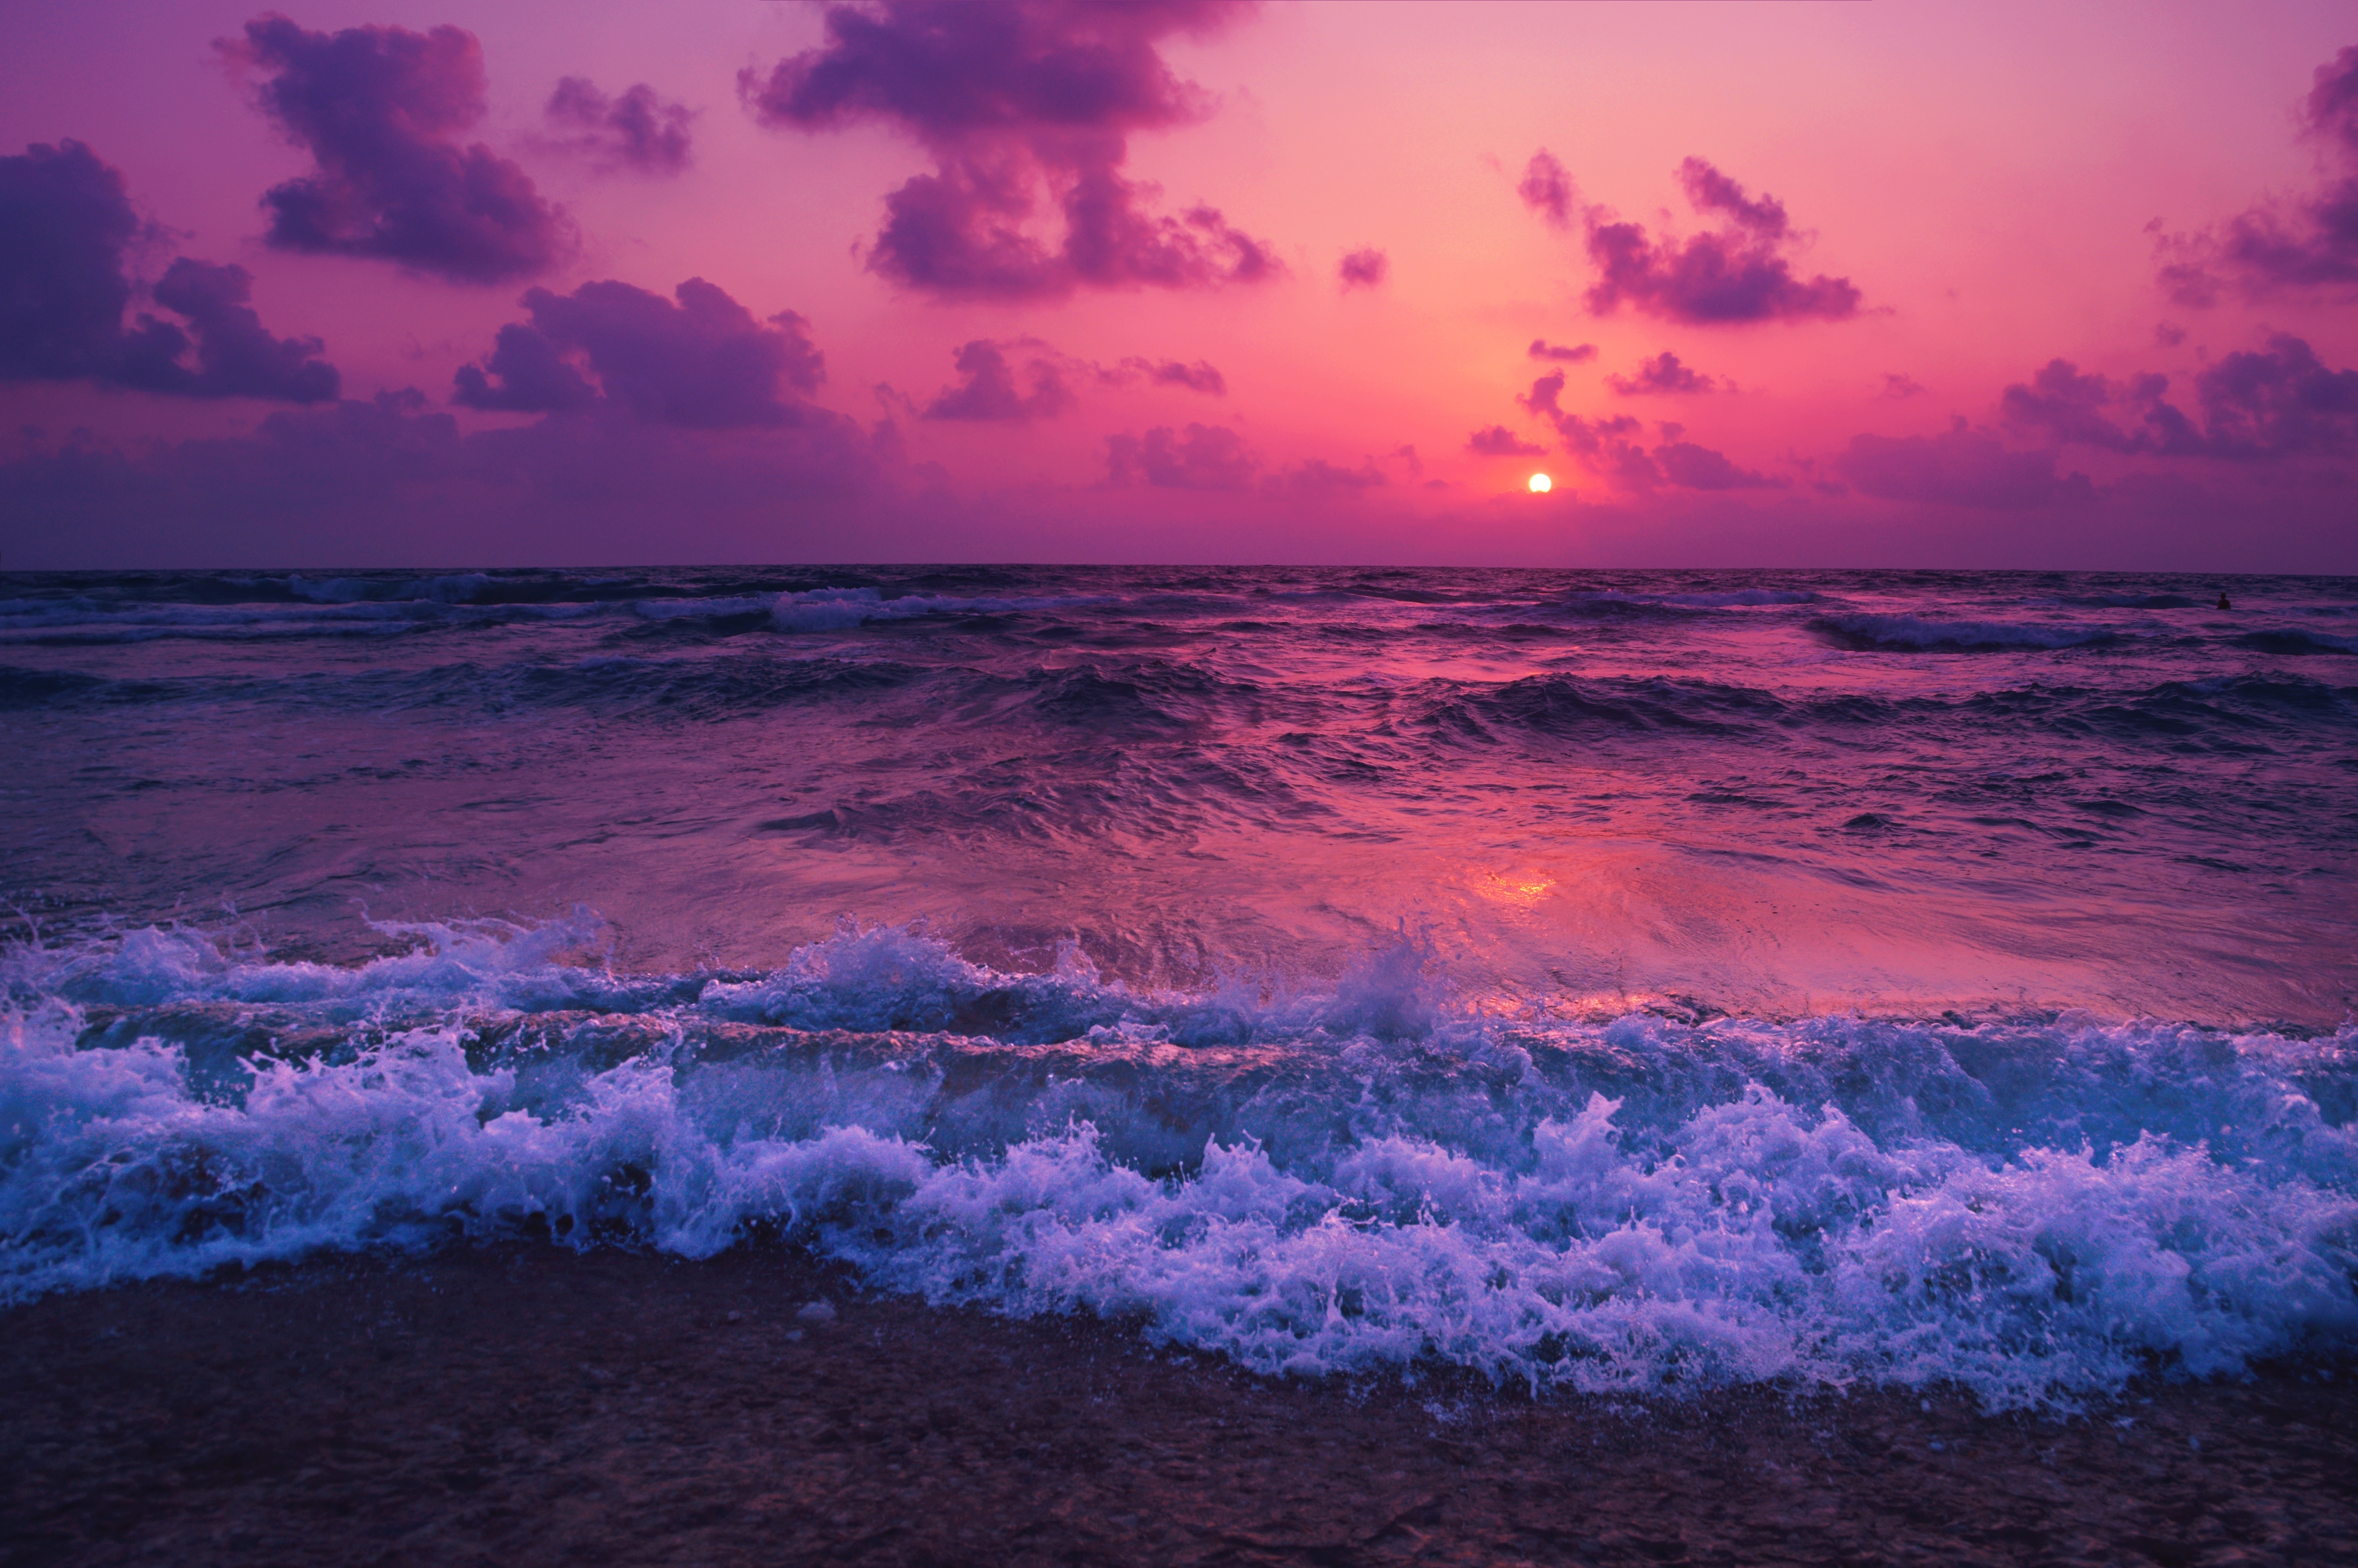 Бесплатное фото Неспокойное море на закате вид с берега